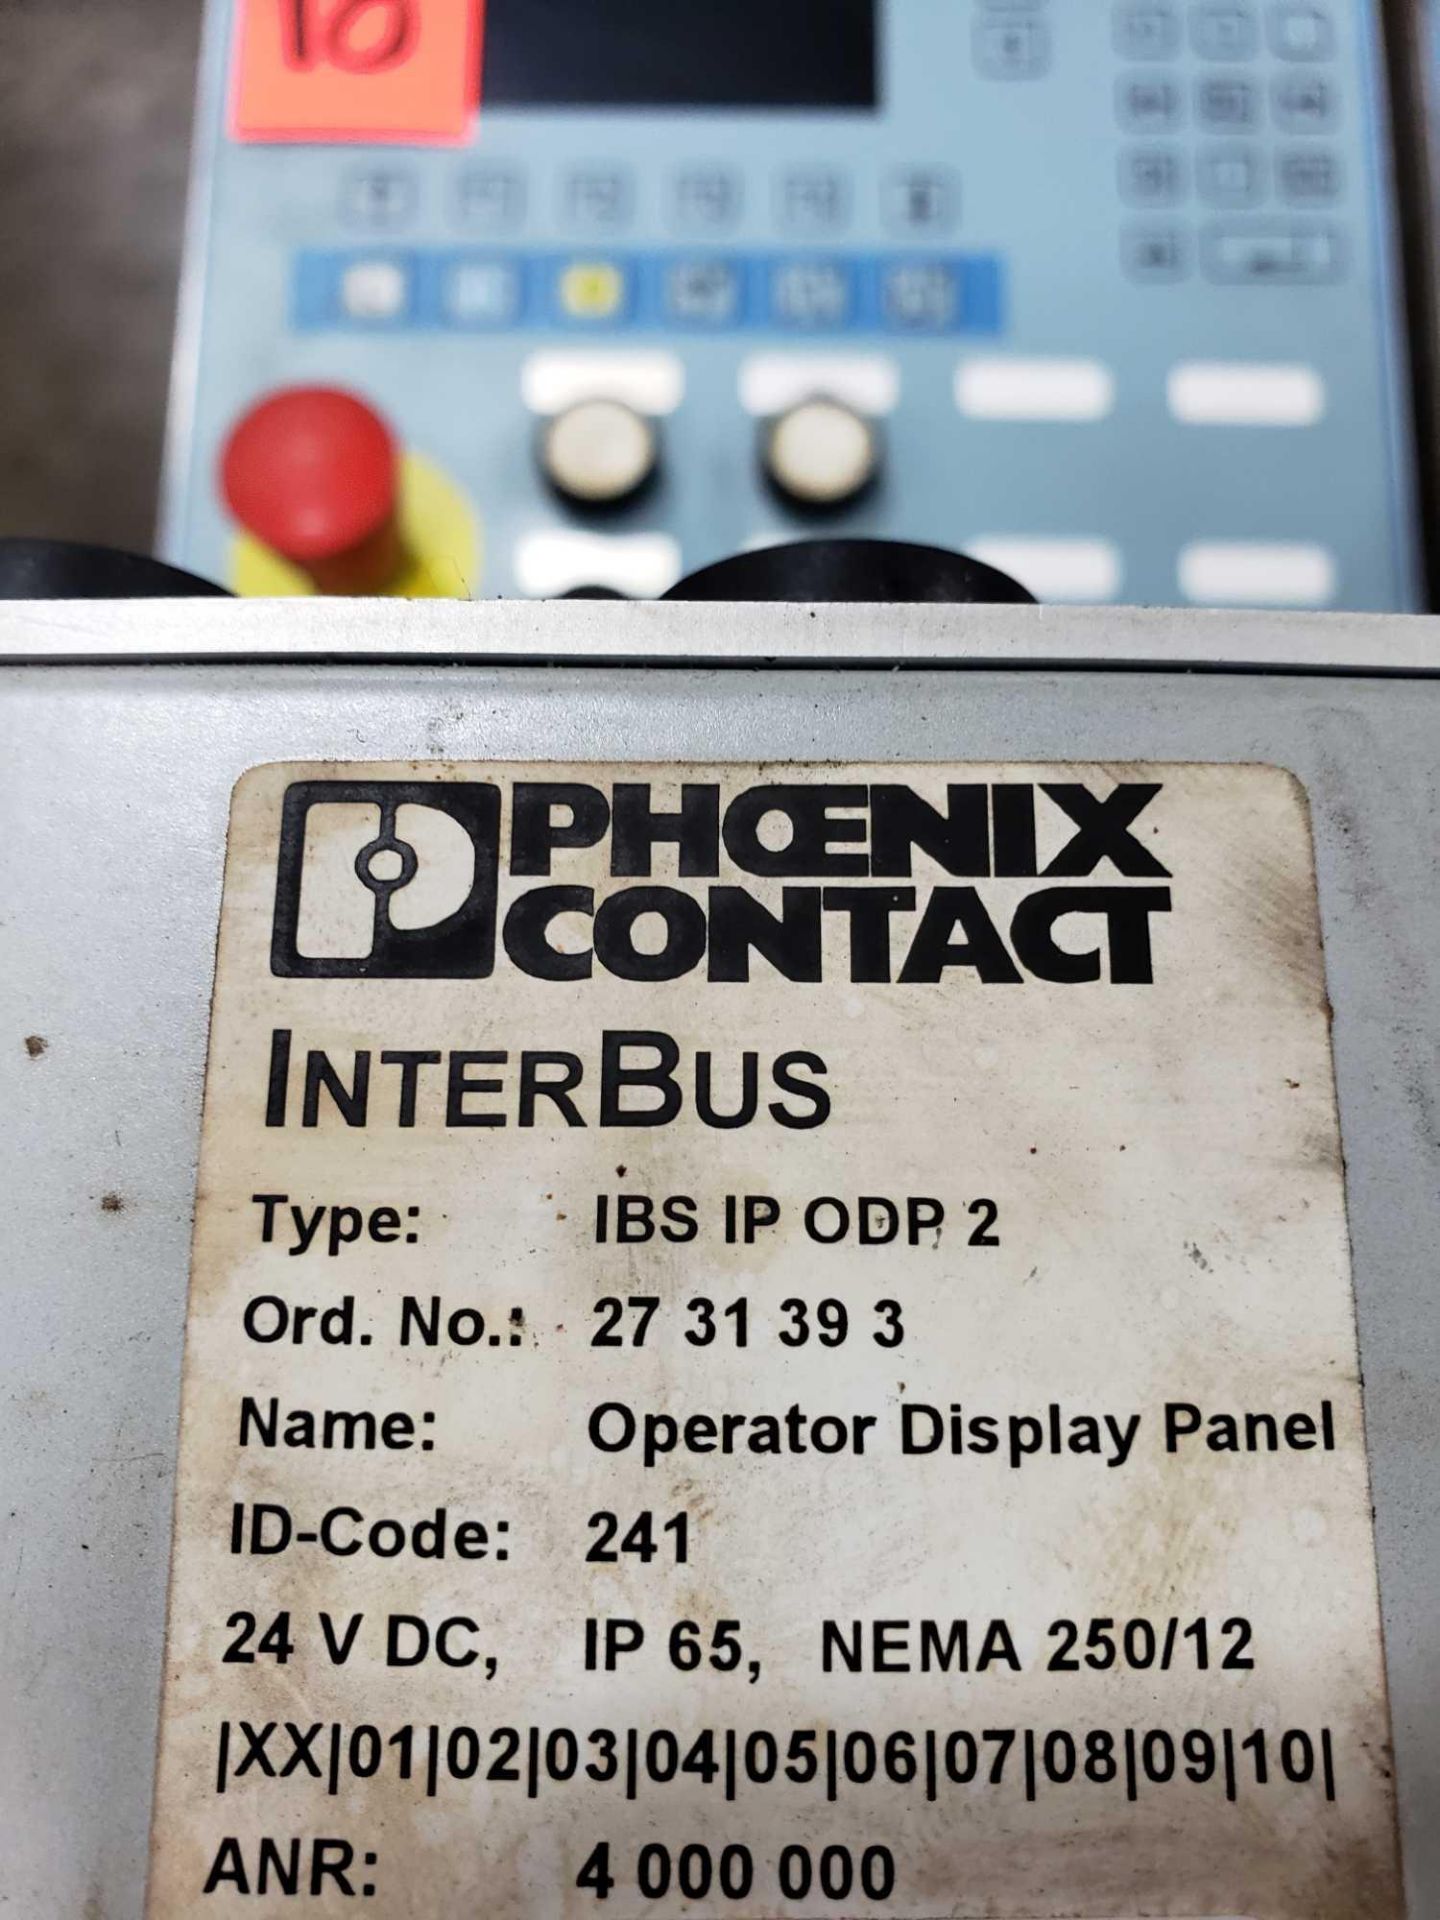 Phoenix Contact Interbus Mode IBS-IP-ODP-2 operator display panel. - Image 2 of 2